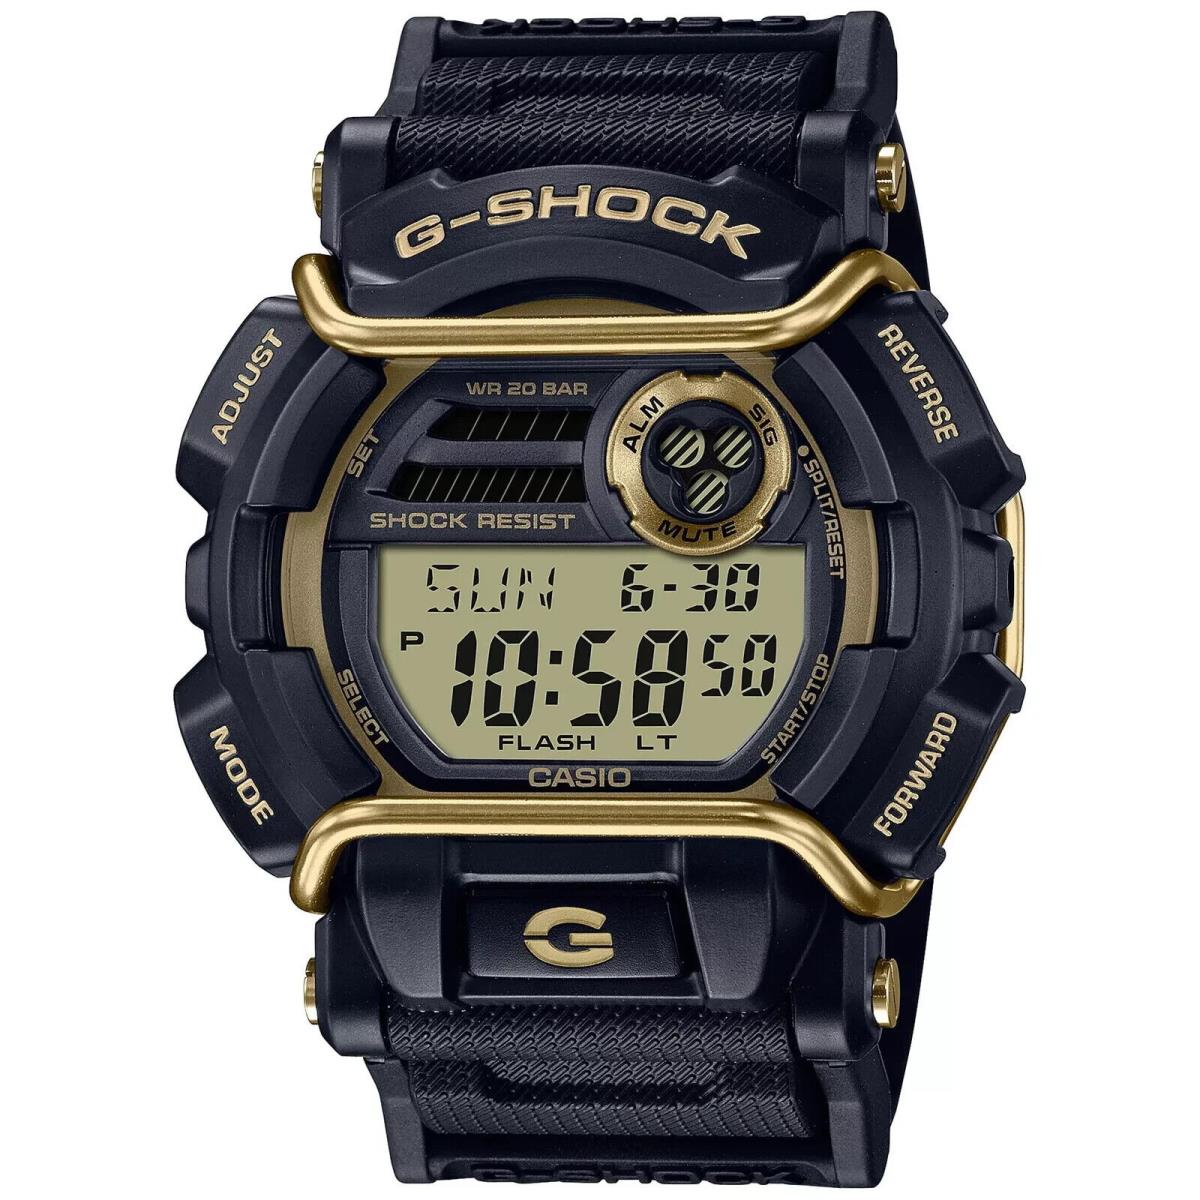 Casio G-shock GD-400GB-1B2 Black Gold Digital Hip Hop Style Men`s Sport Watch